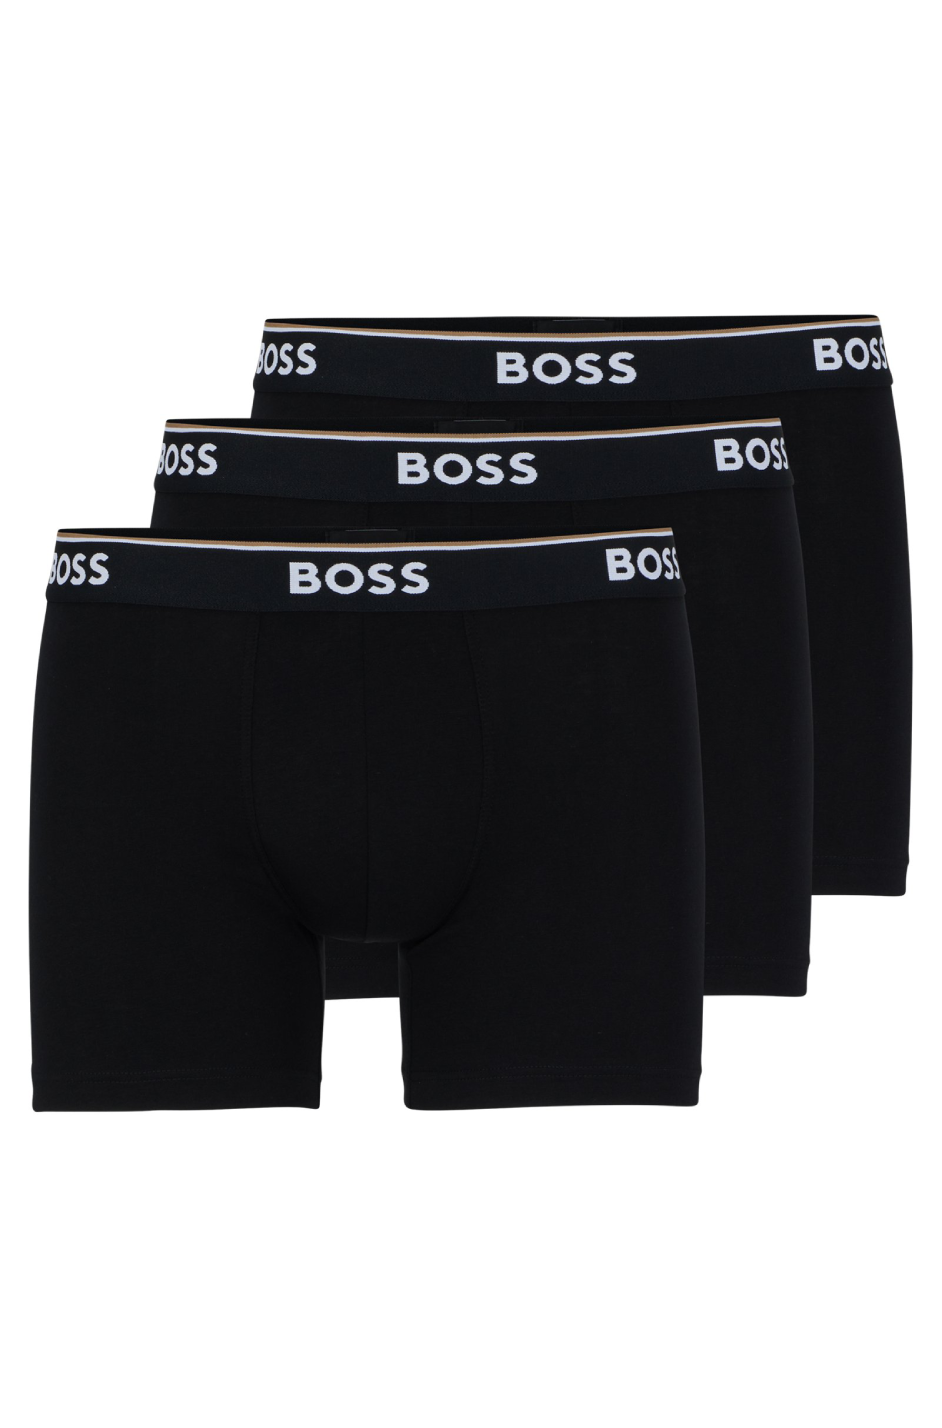 Boss 3 Pack Men's Boxer Brief